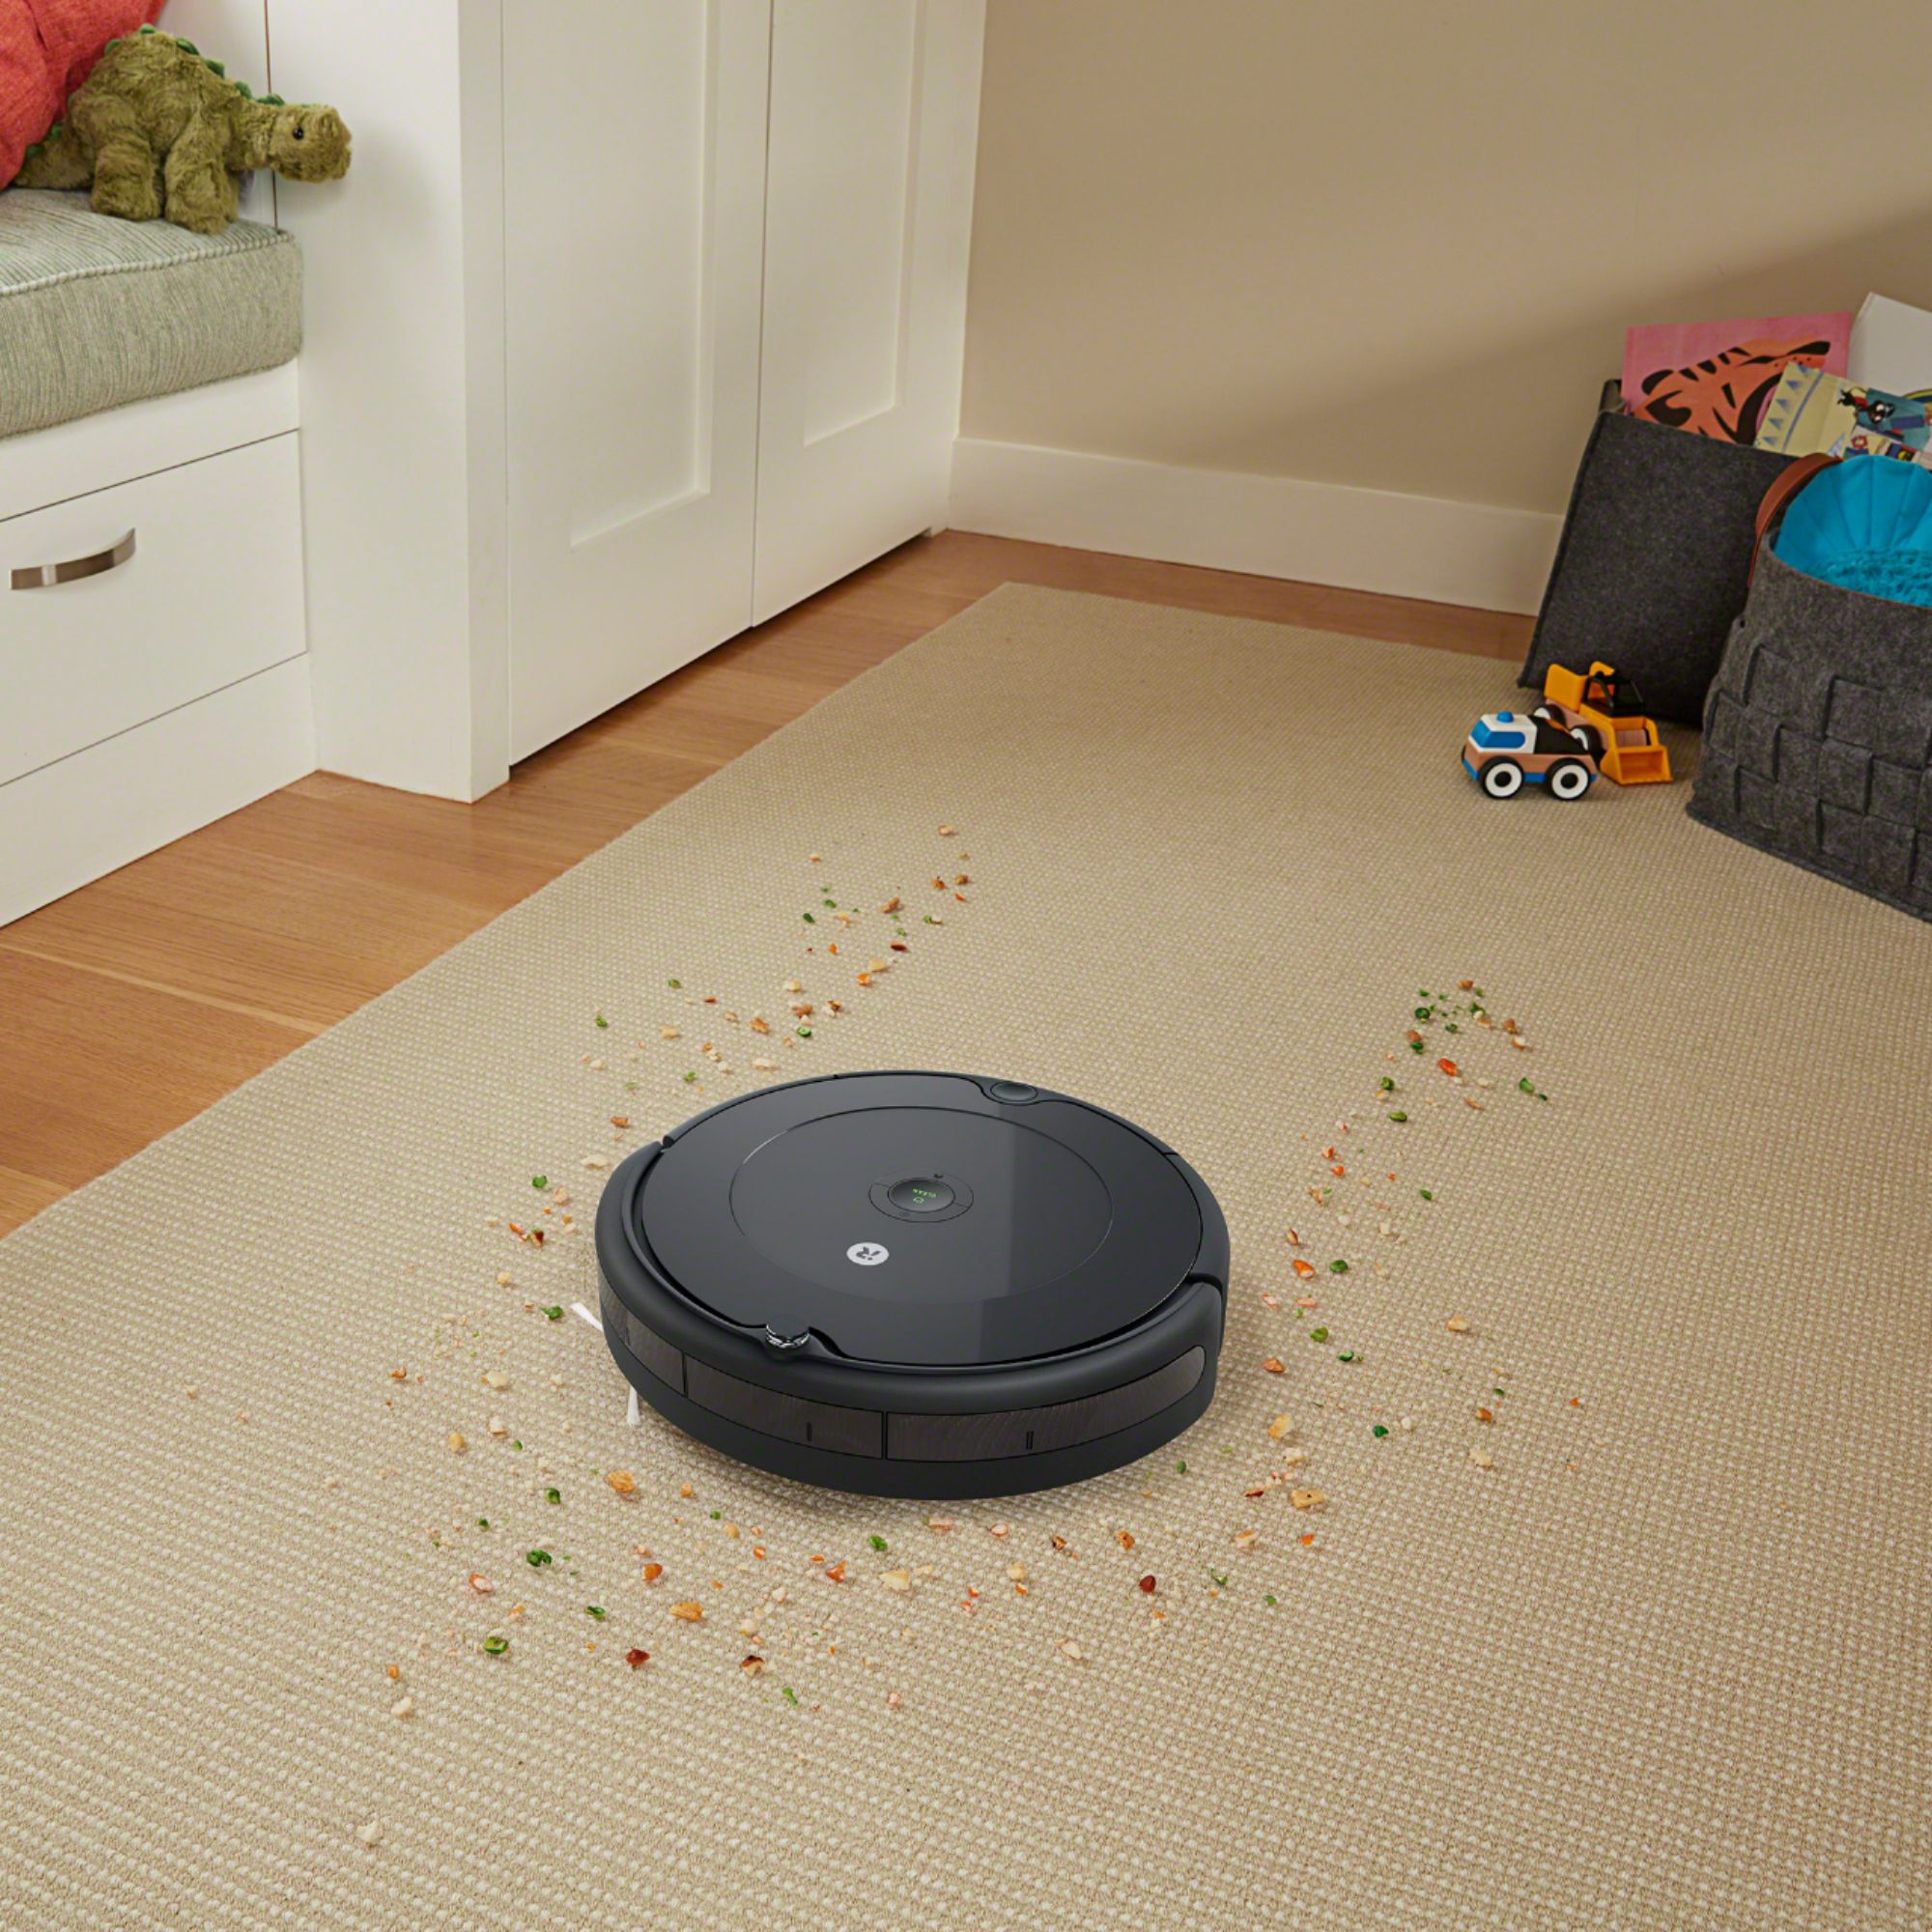 iRobot - Roomba Wi-Fi Connected Robot Vacuum